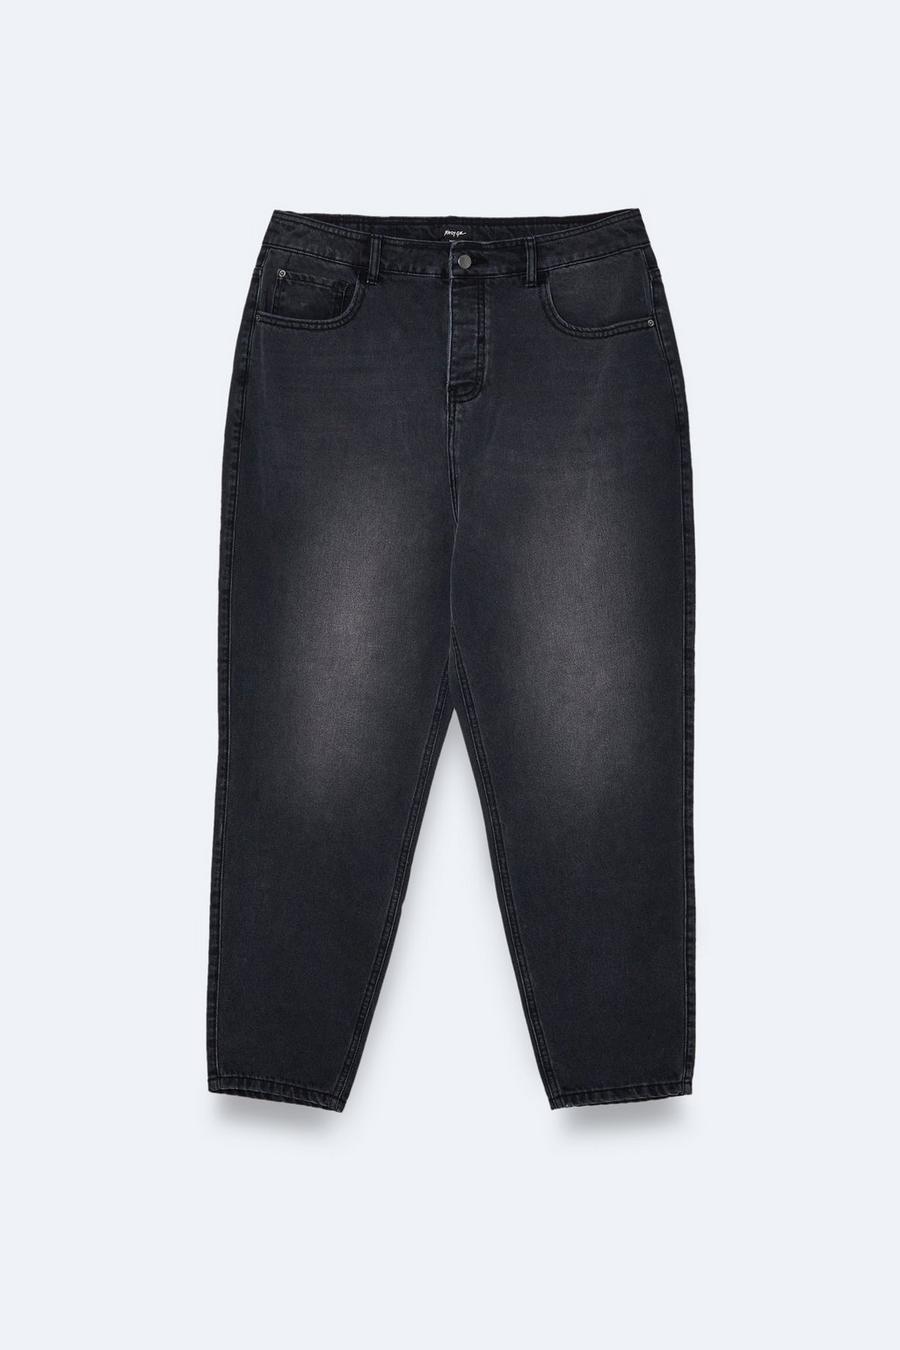 Washed black Plus Size Denim Mom Jeans